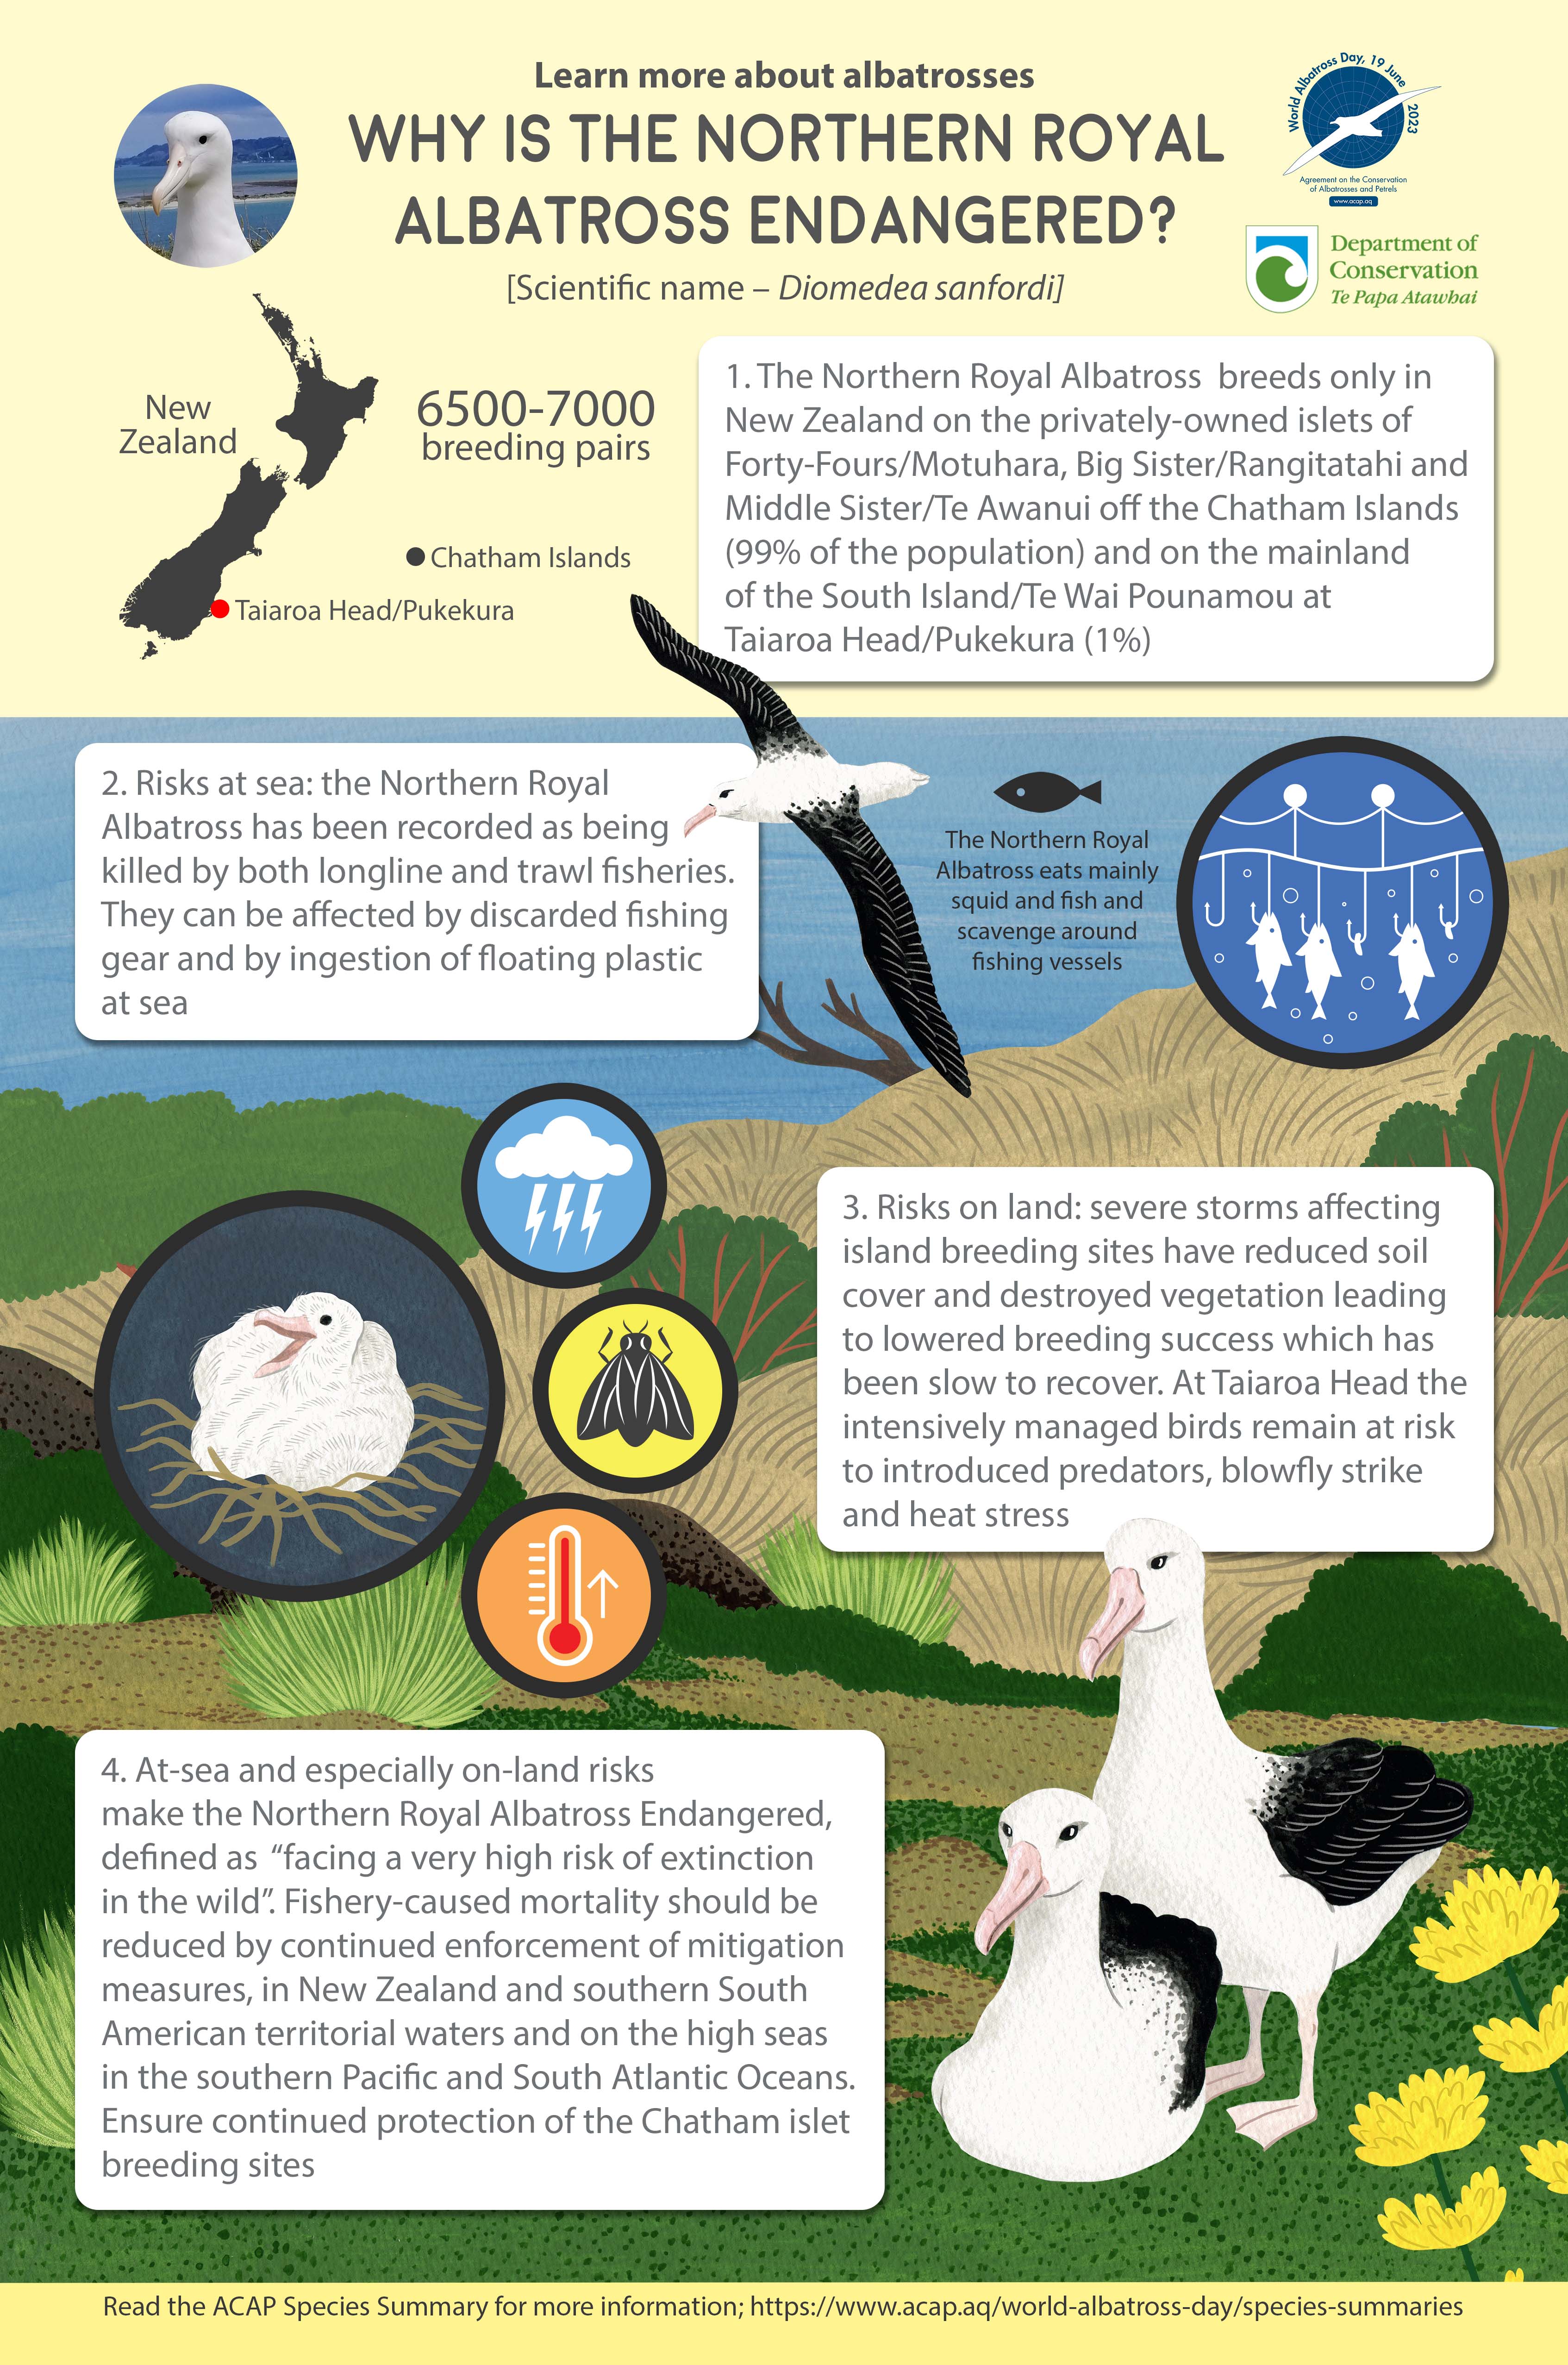 infographic endangered species